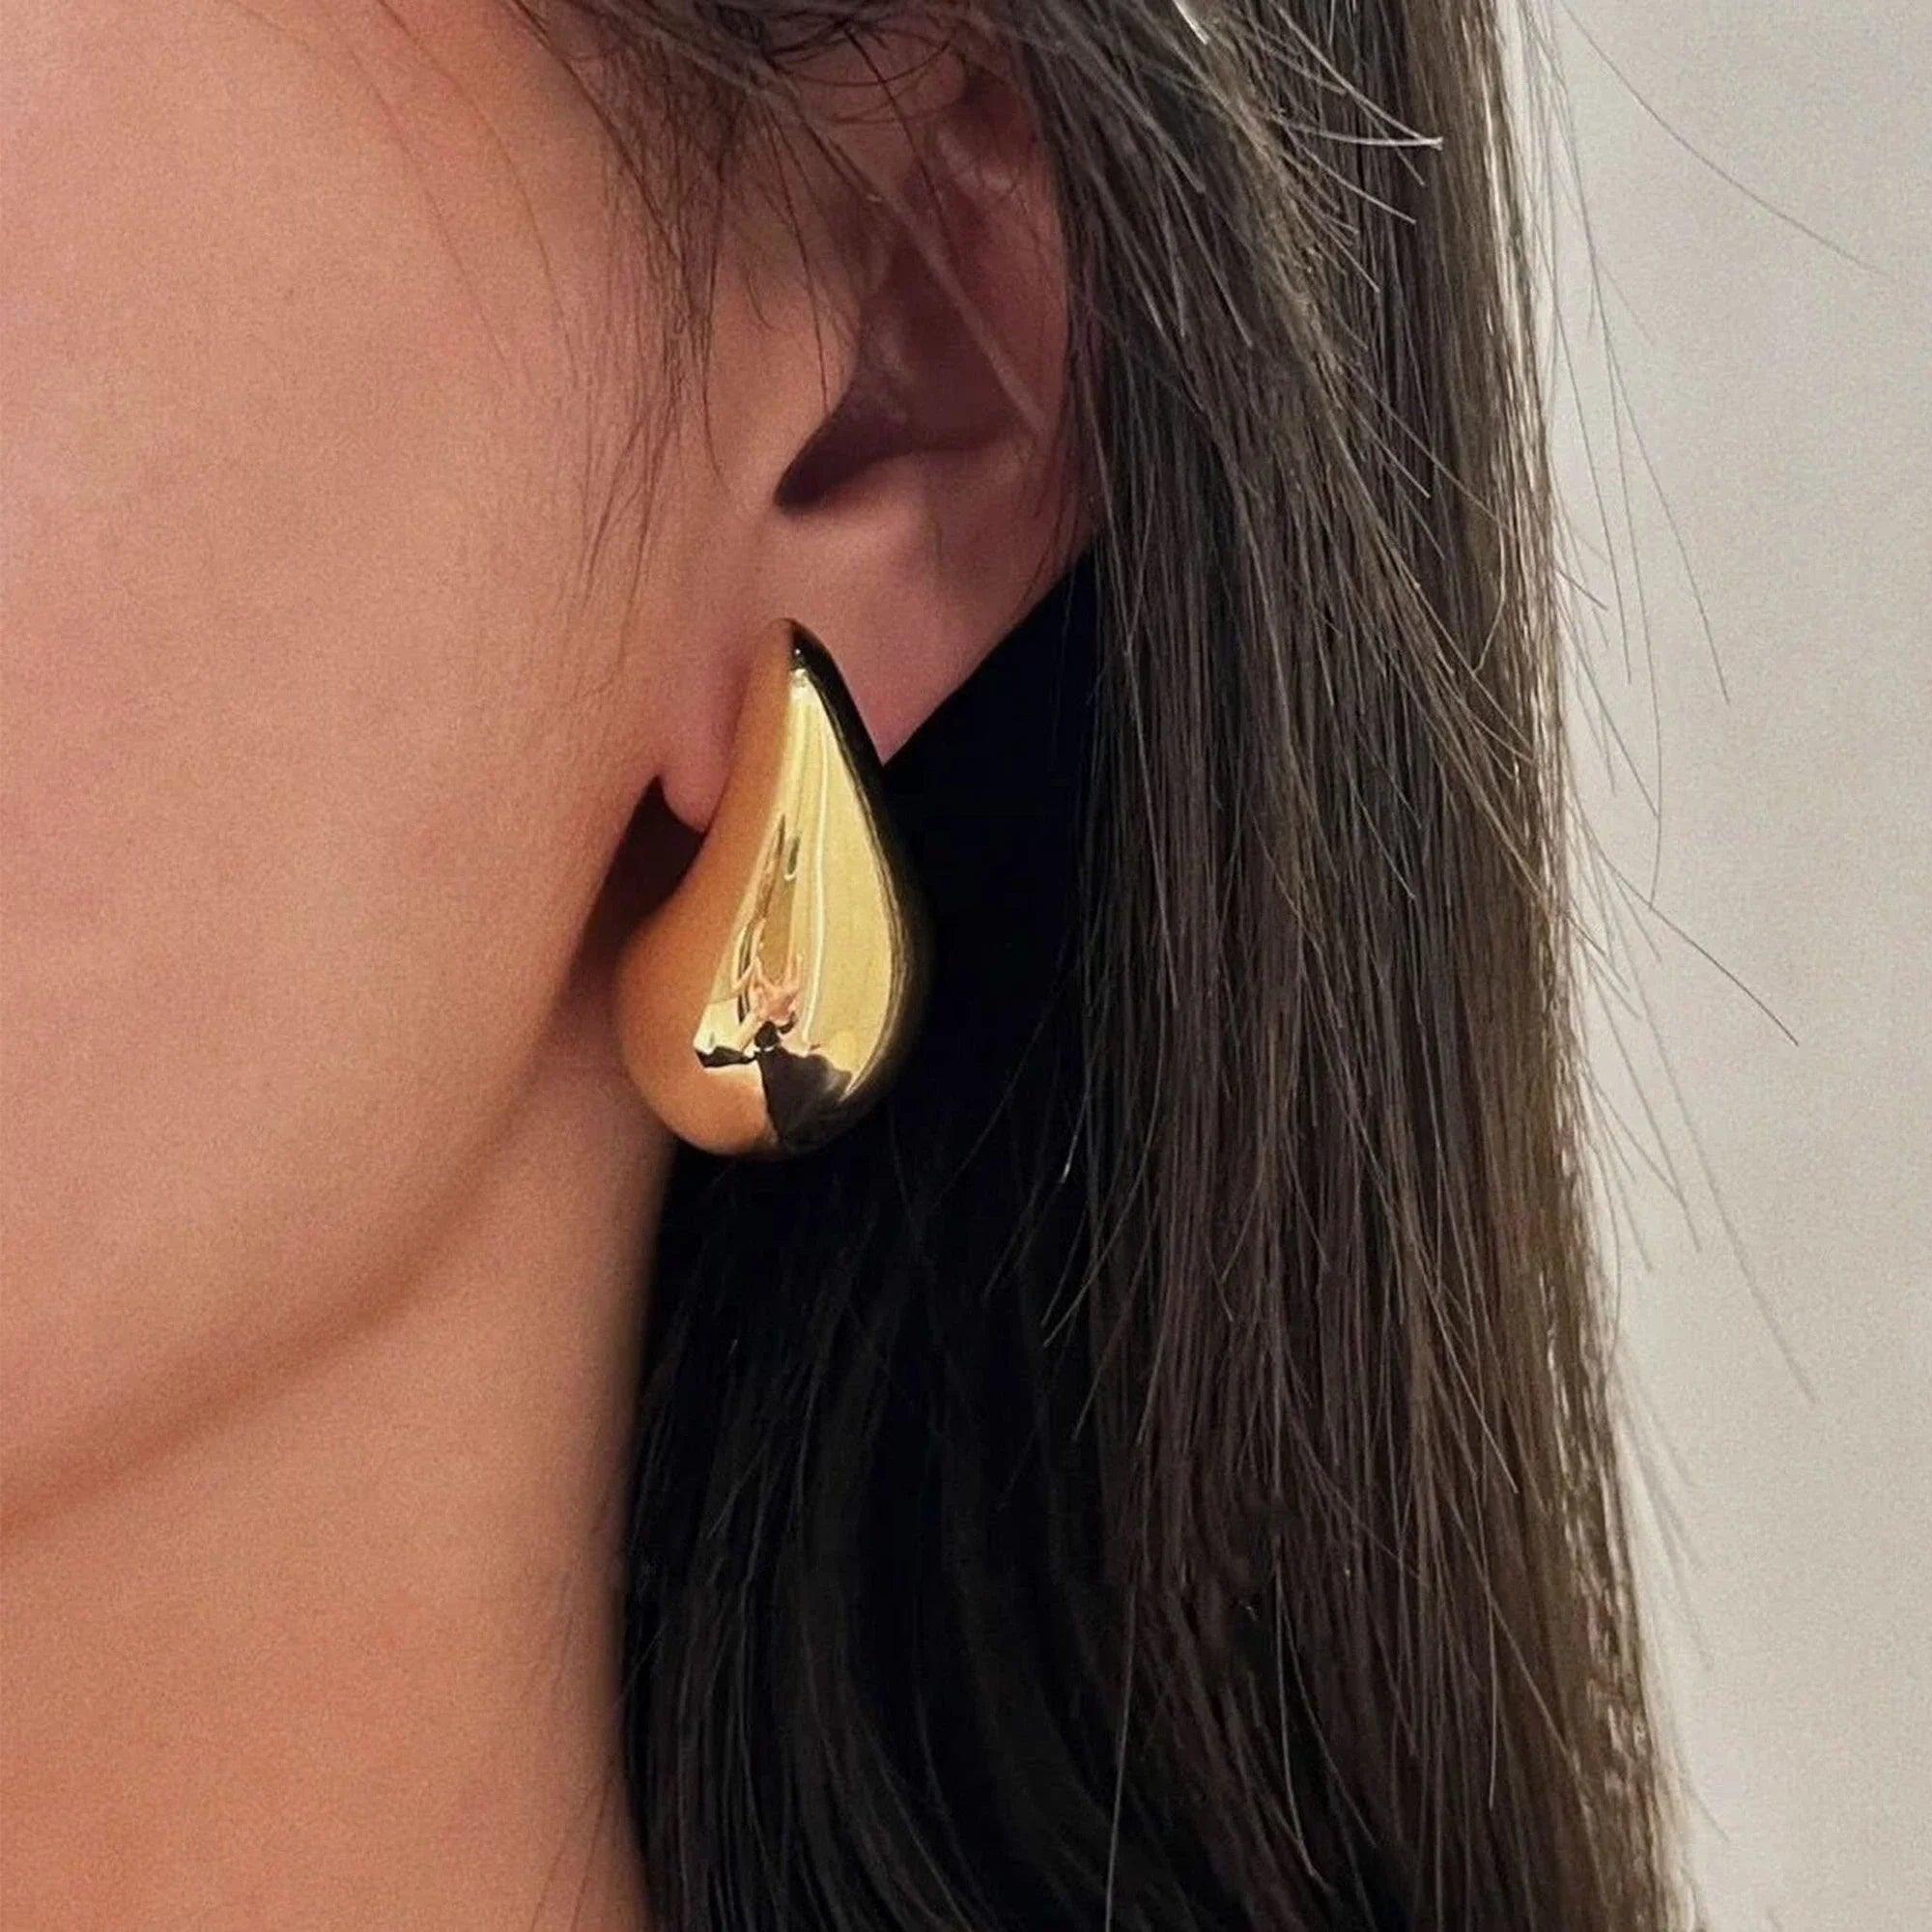 Extravagant Waterdrop Dangle Earrings - Chunky Teardrop Statement Jewelry for Women  ourlum.com   